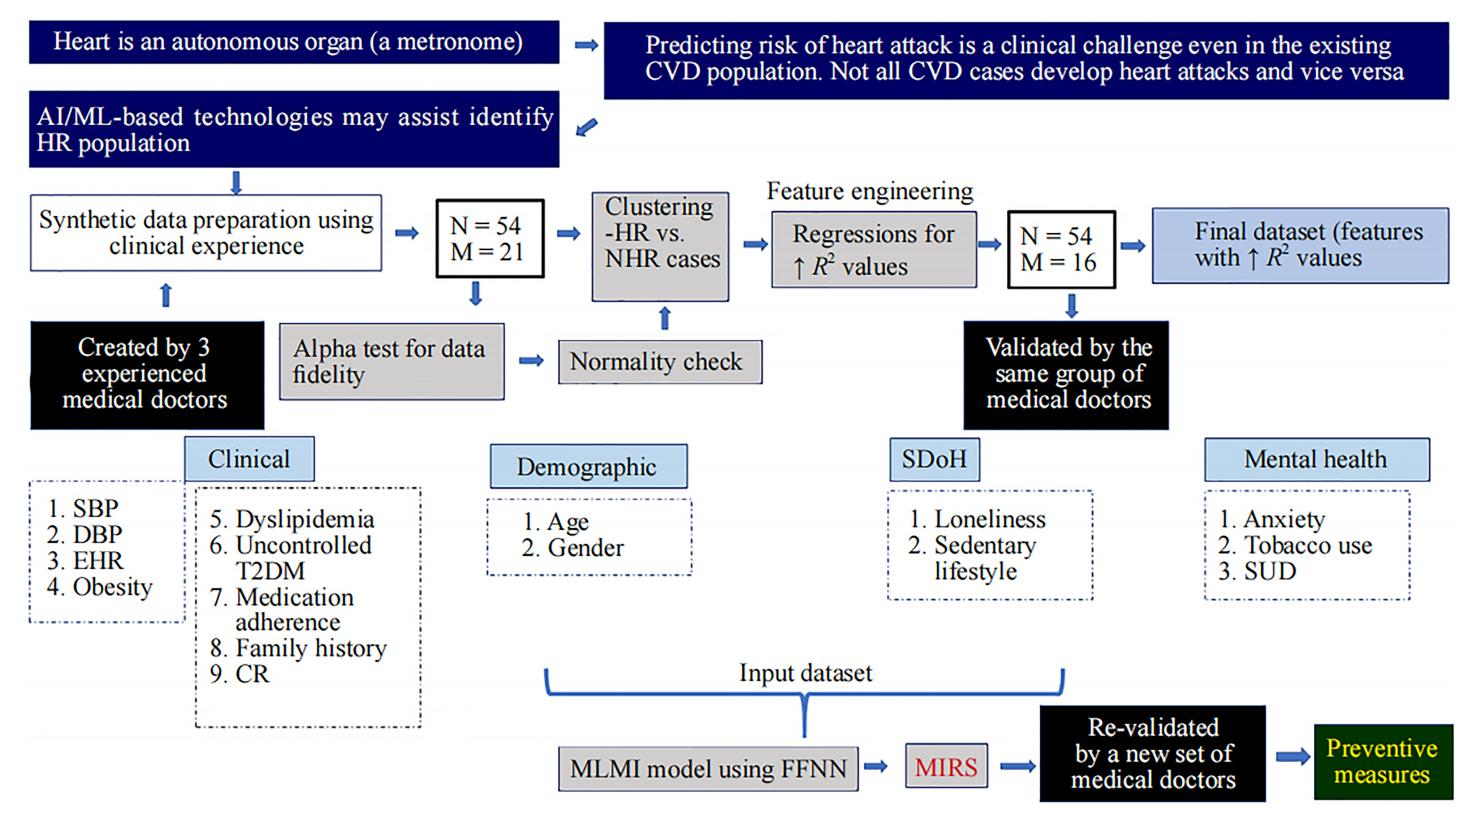 MLMI: A Machine Learning Model for Estimating Risk of Myocardial Infarction